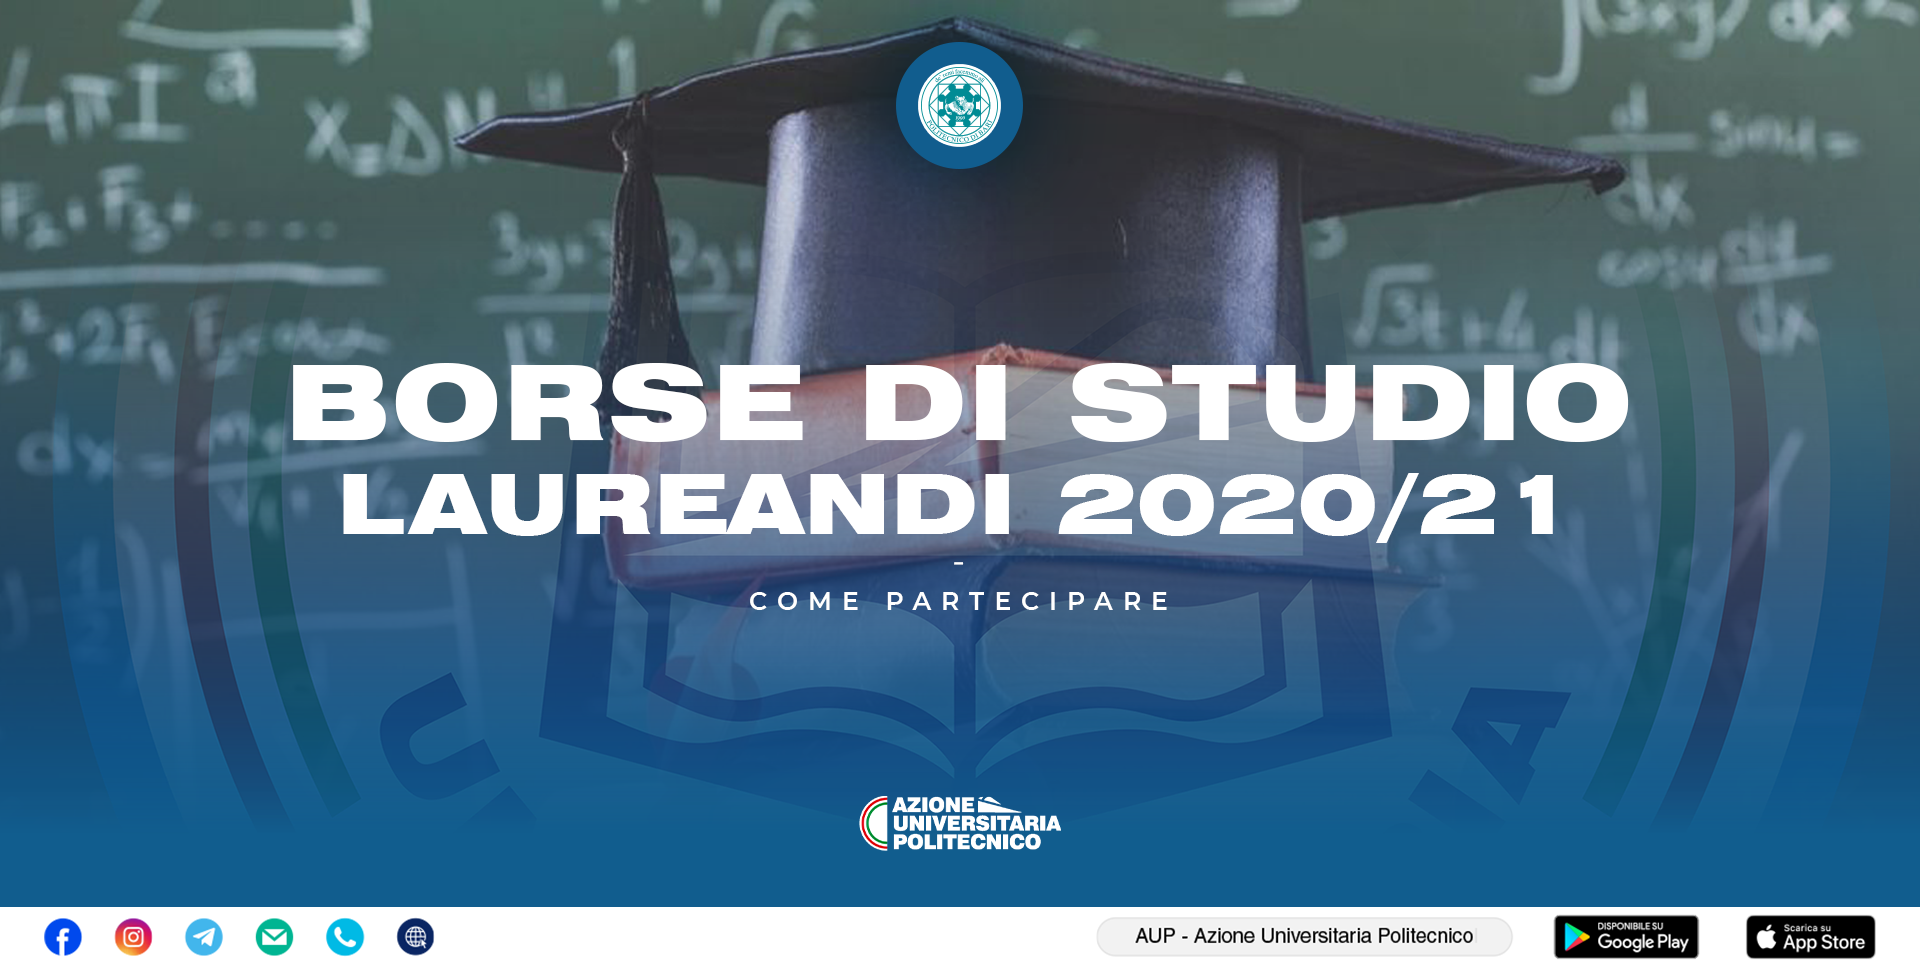 BORSE DI STUDIO LAUREANDI A.A. 2020/21